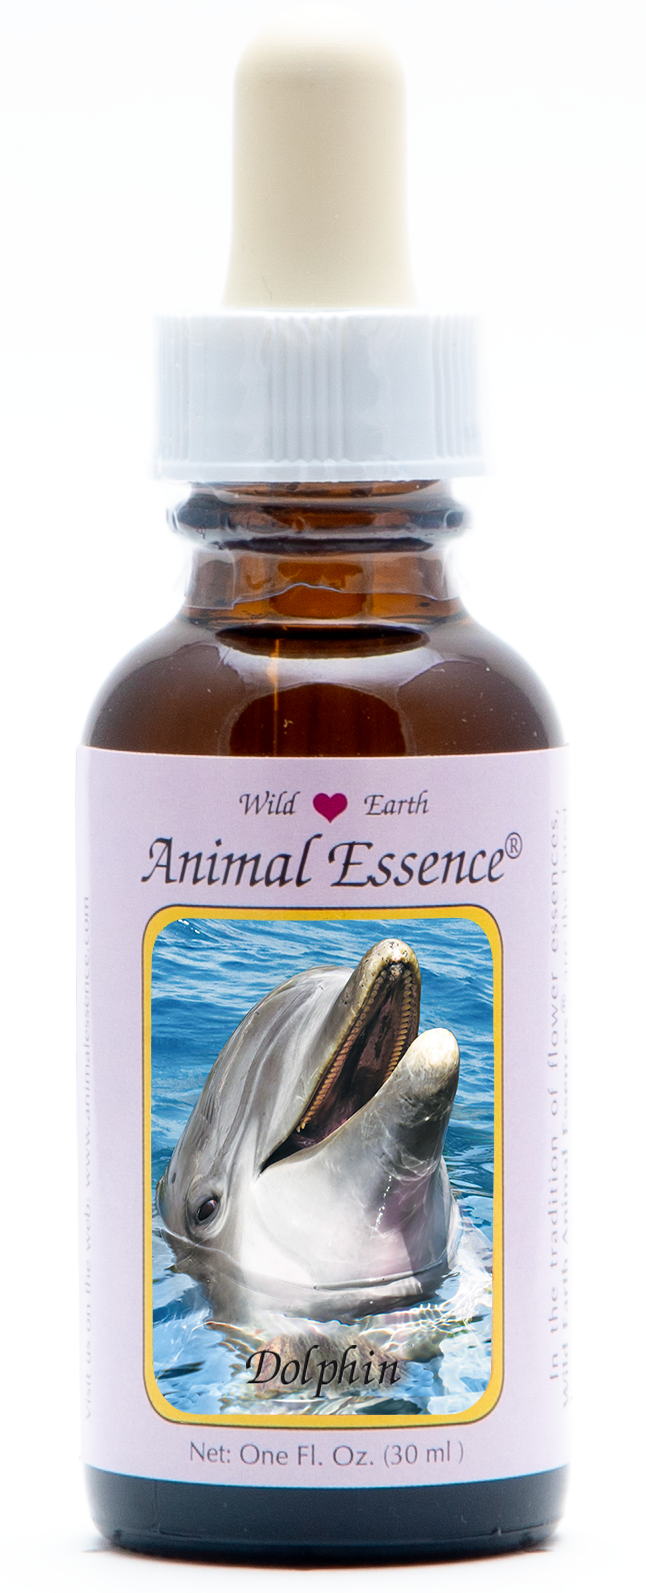 Dolphin animal essence 30ml